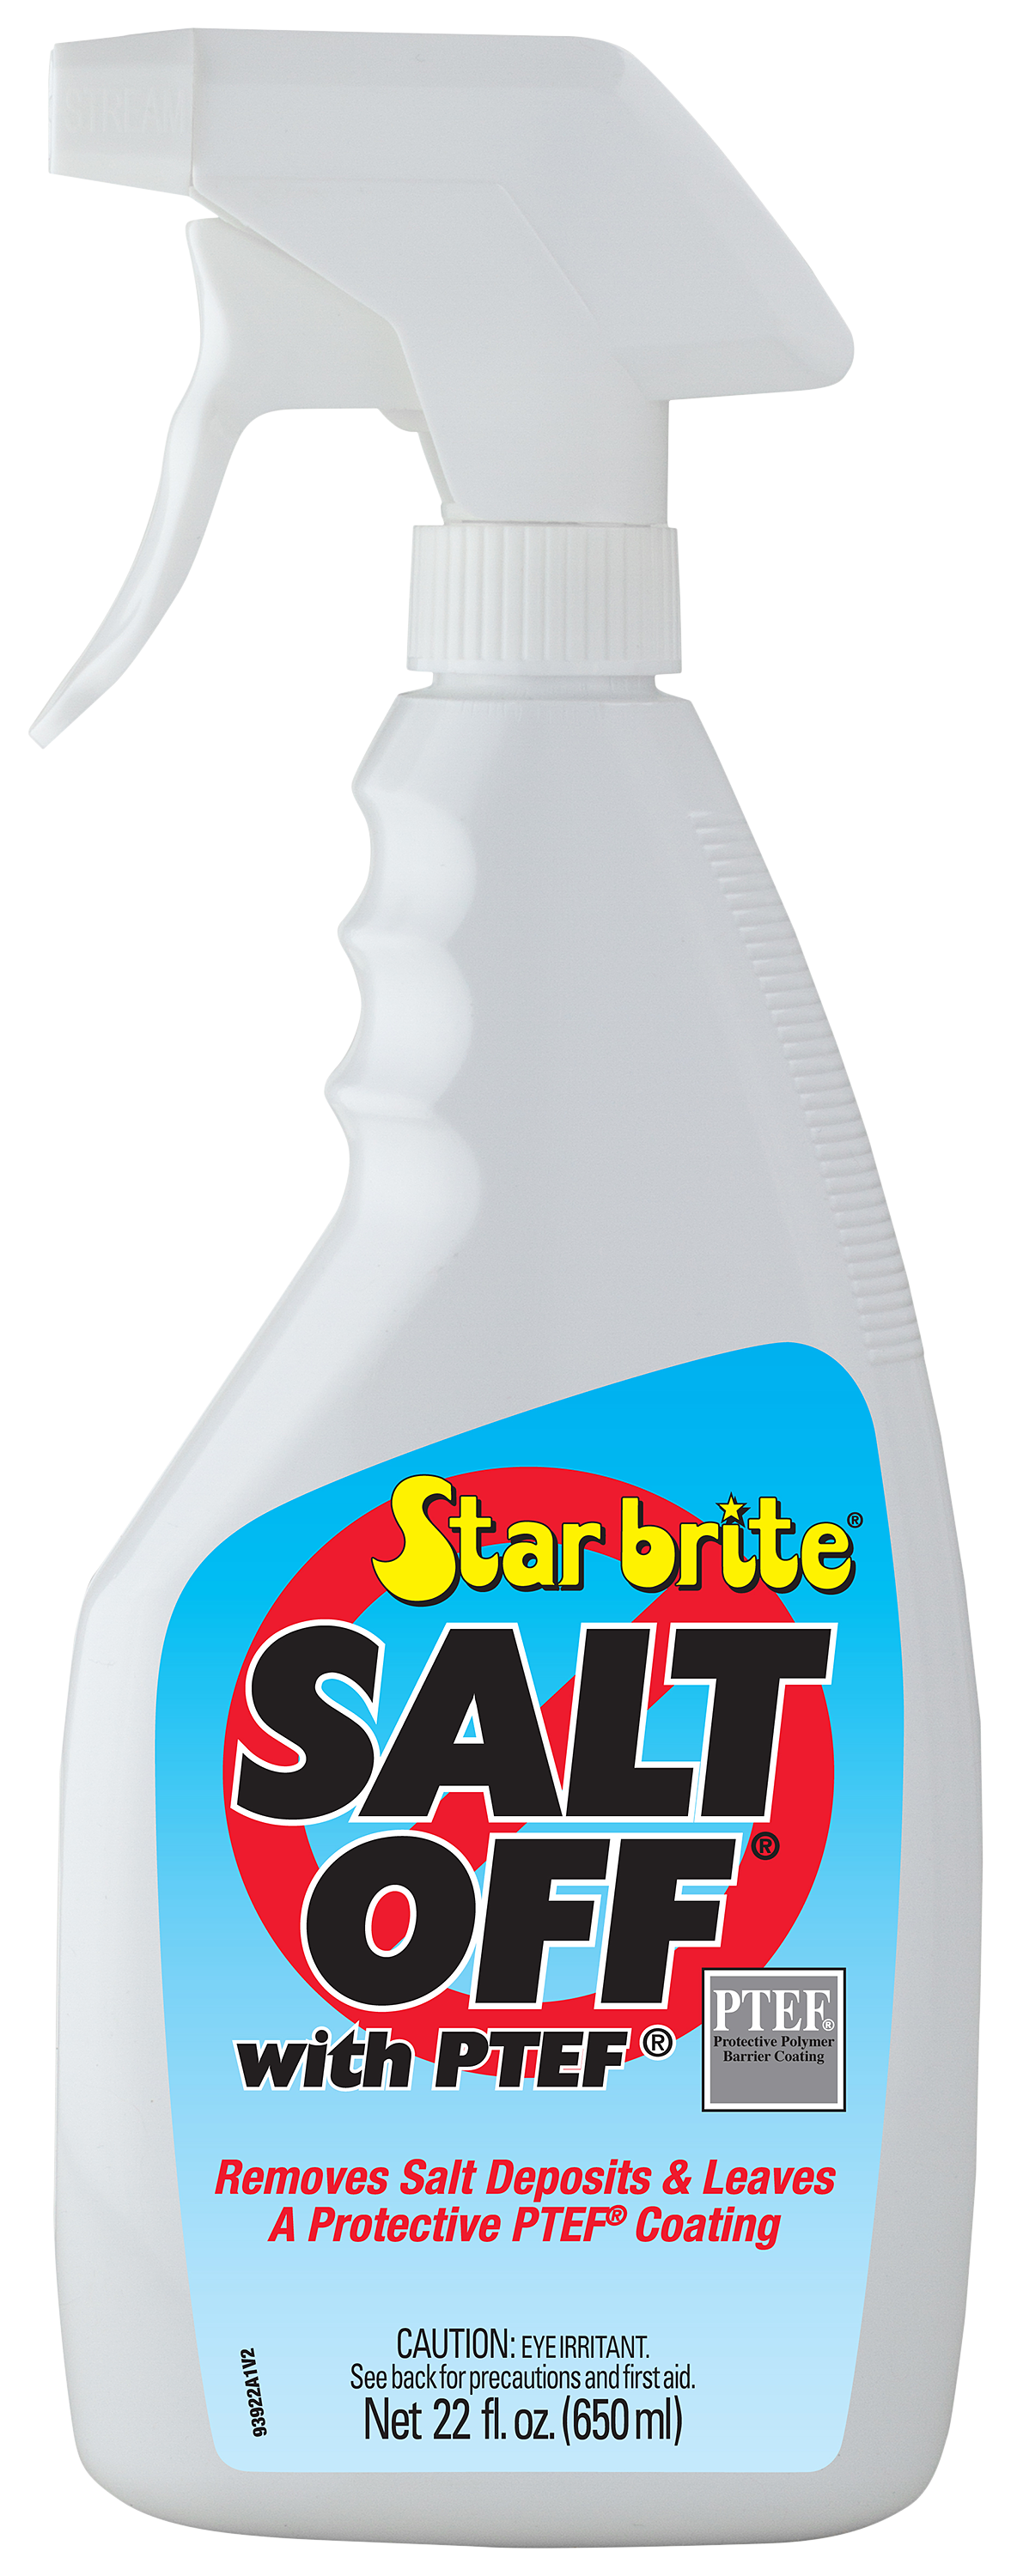 Starbrite - Salt Off Concentrate Kit with Applicator - 32 oz. - 94000